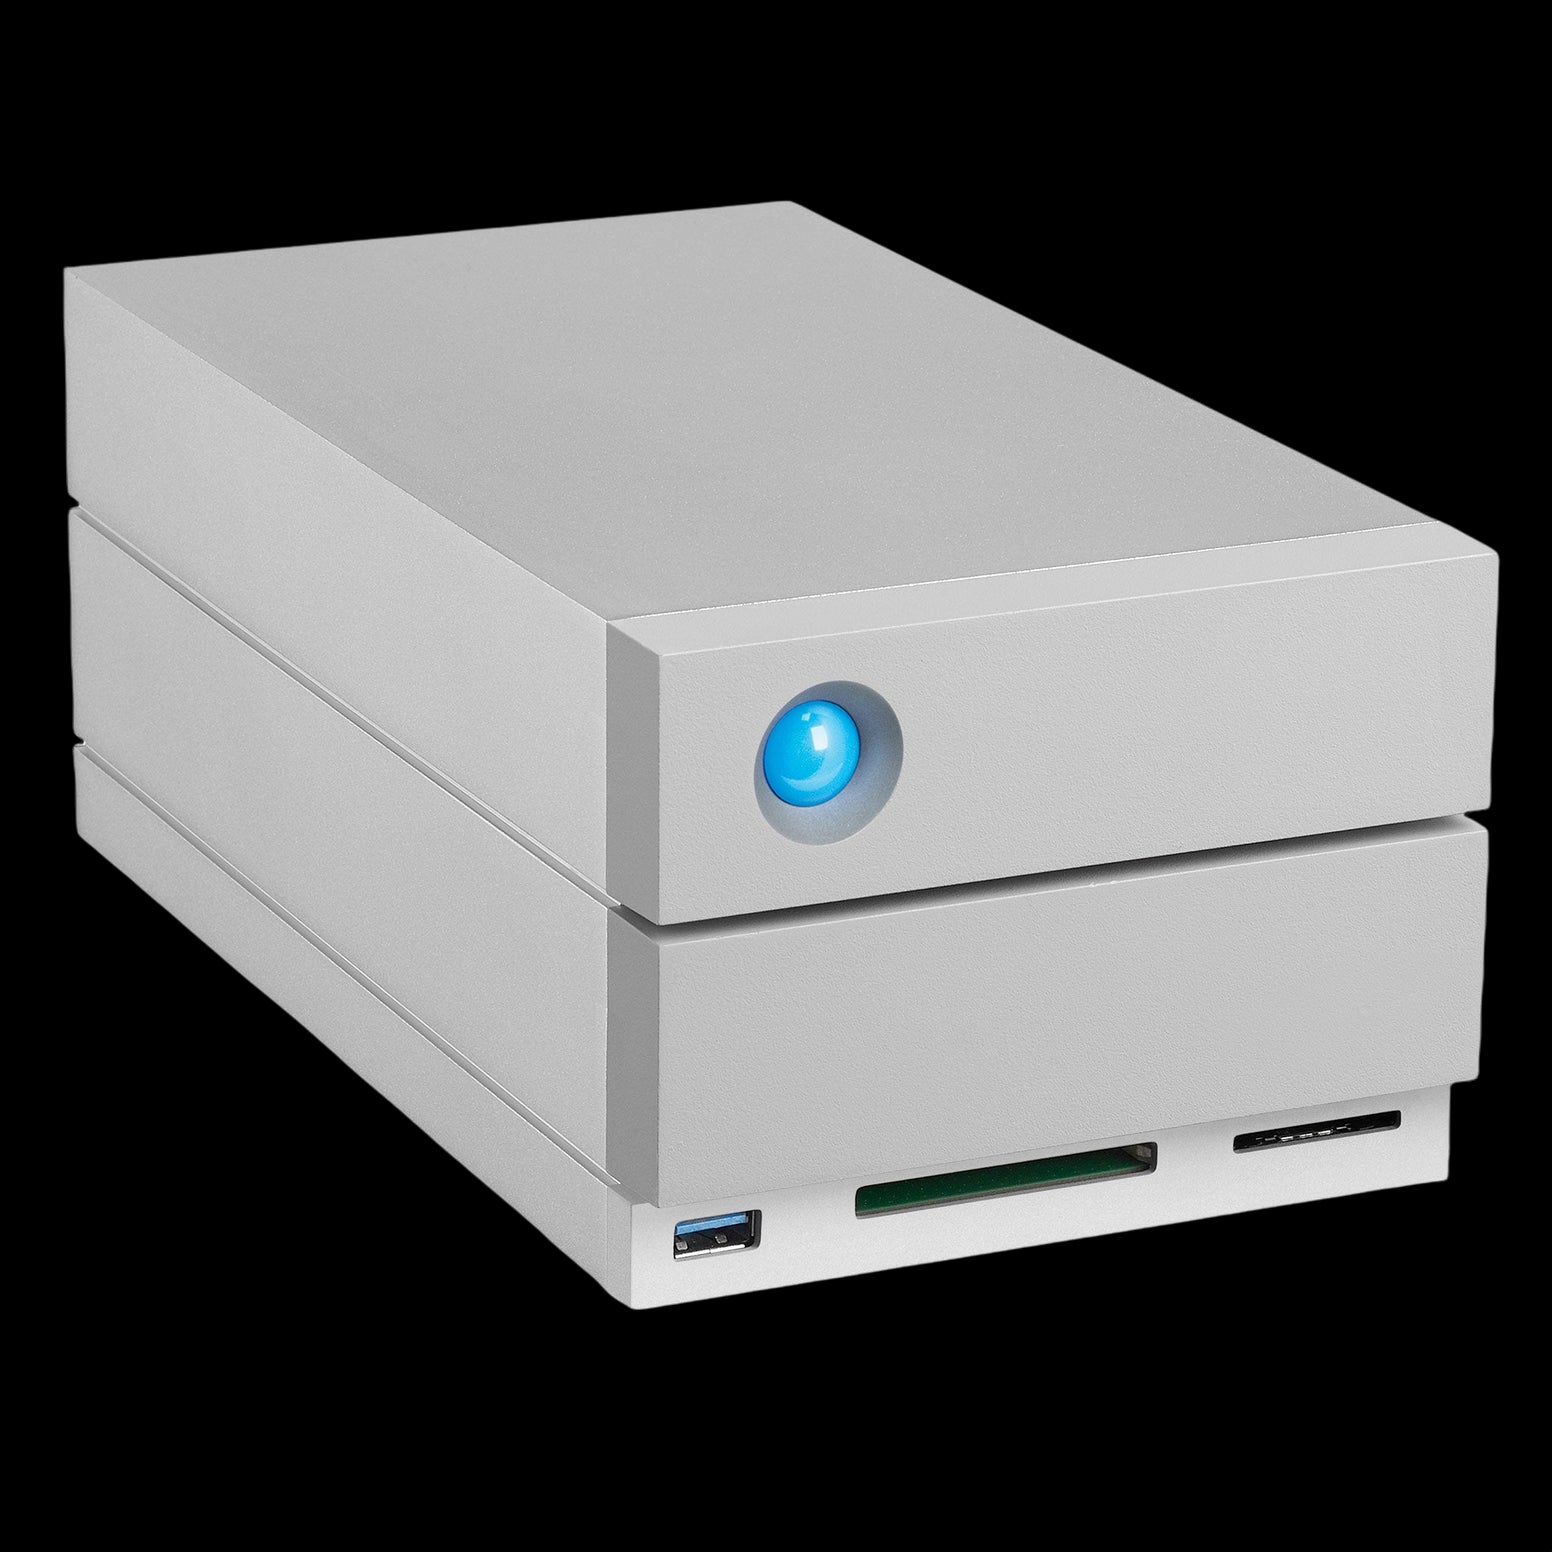 LaCie 28TB HDD 2Big Dock Thunderbolt 3 & USB-C Desktop RAID Storage & Docking Station - Discontinued